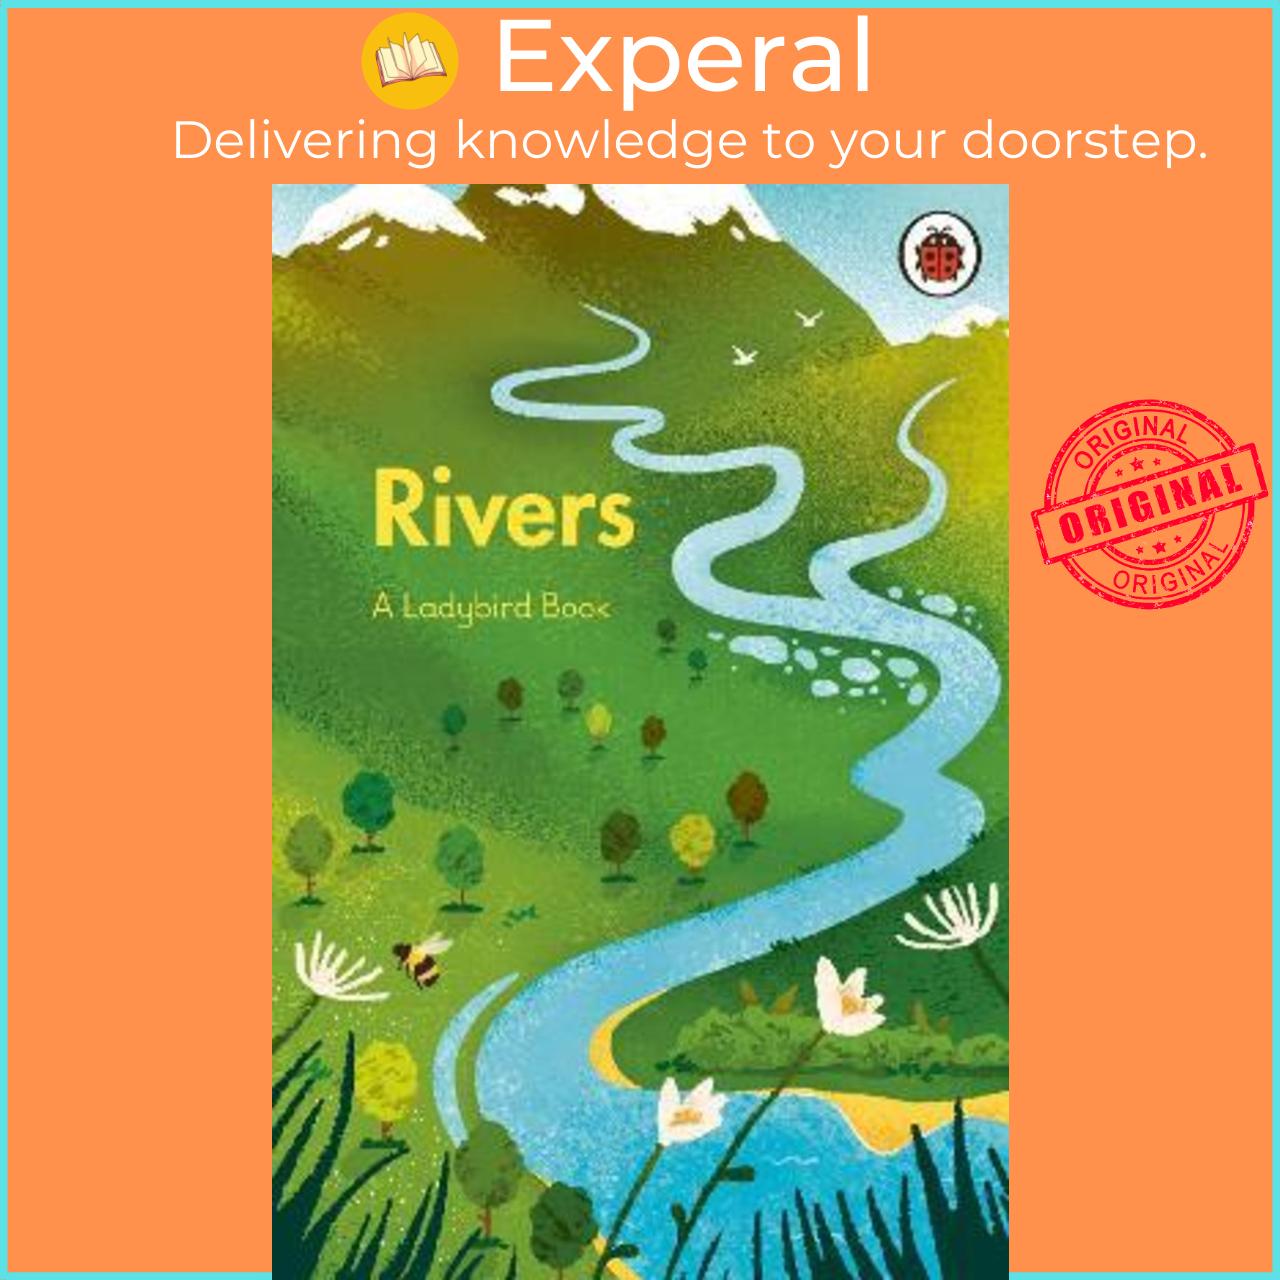 Sách - A Ladybird Book: Rivers by Ladybird (UK edition, hardcover)